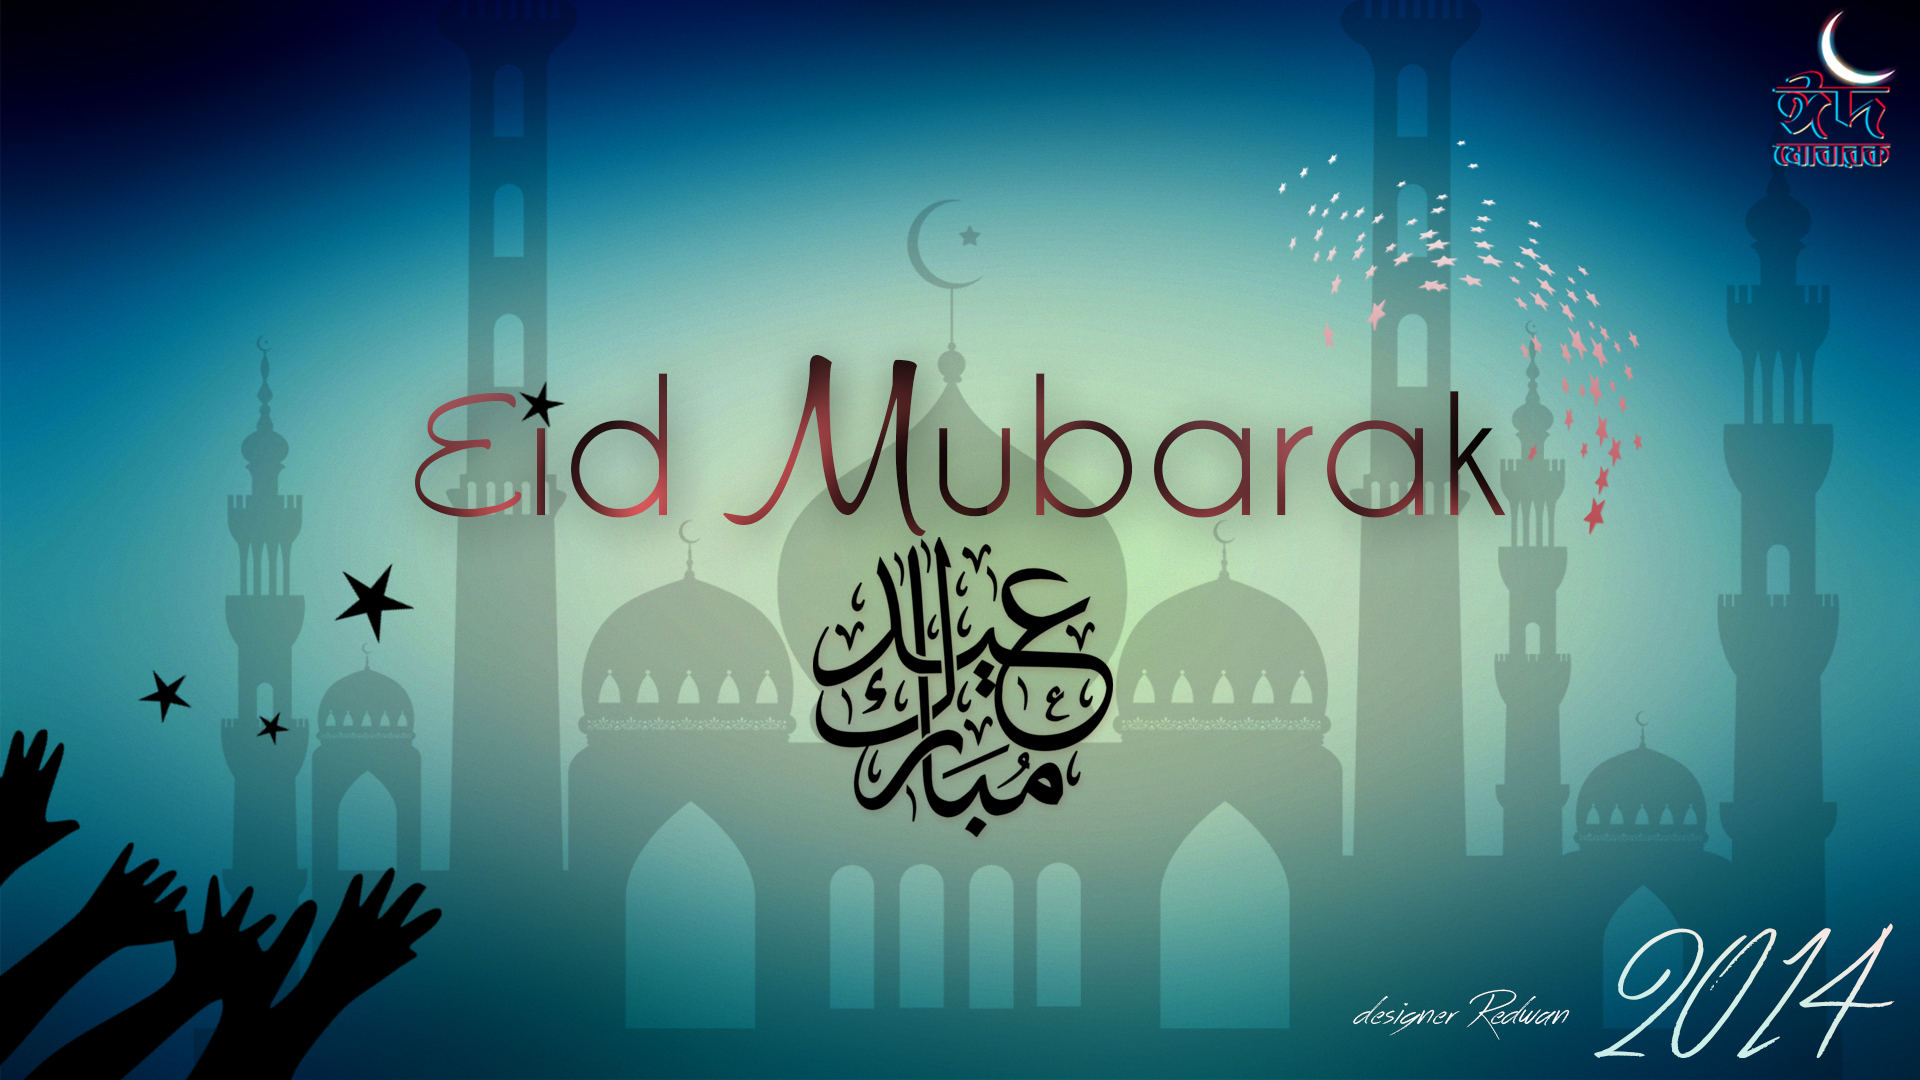 Eid Mubarak 1080p HD Wallpaper by chchcheckit on DeviantArt